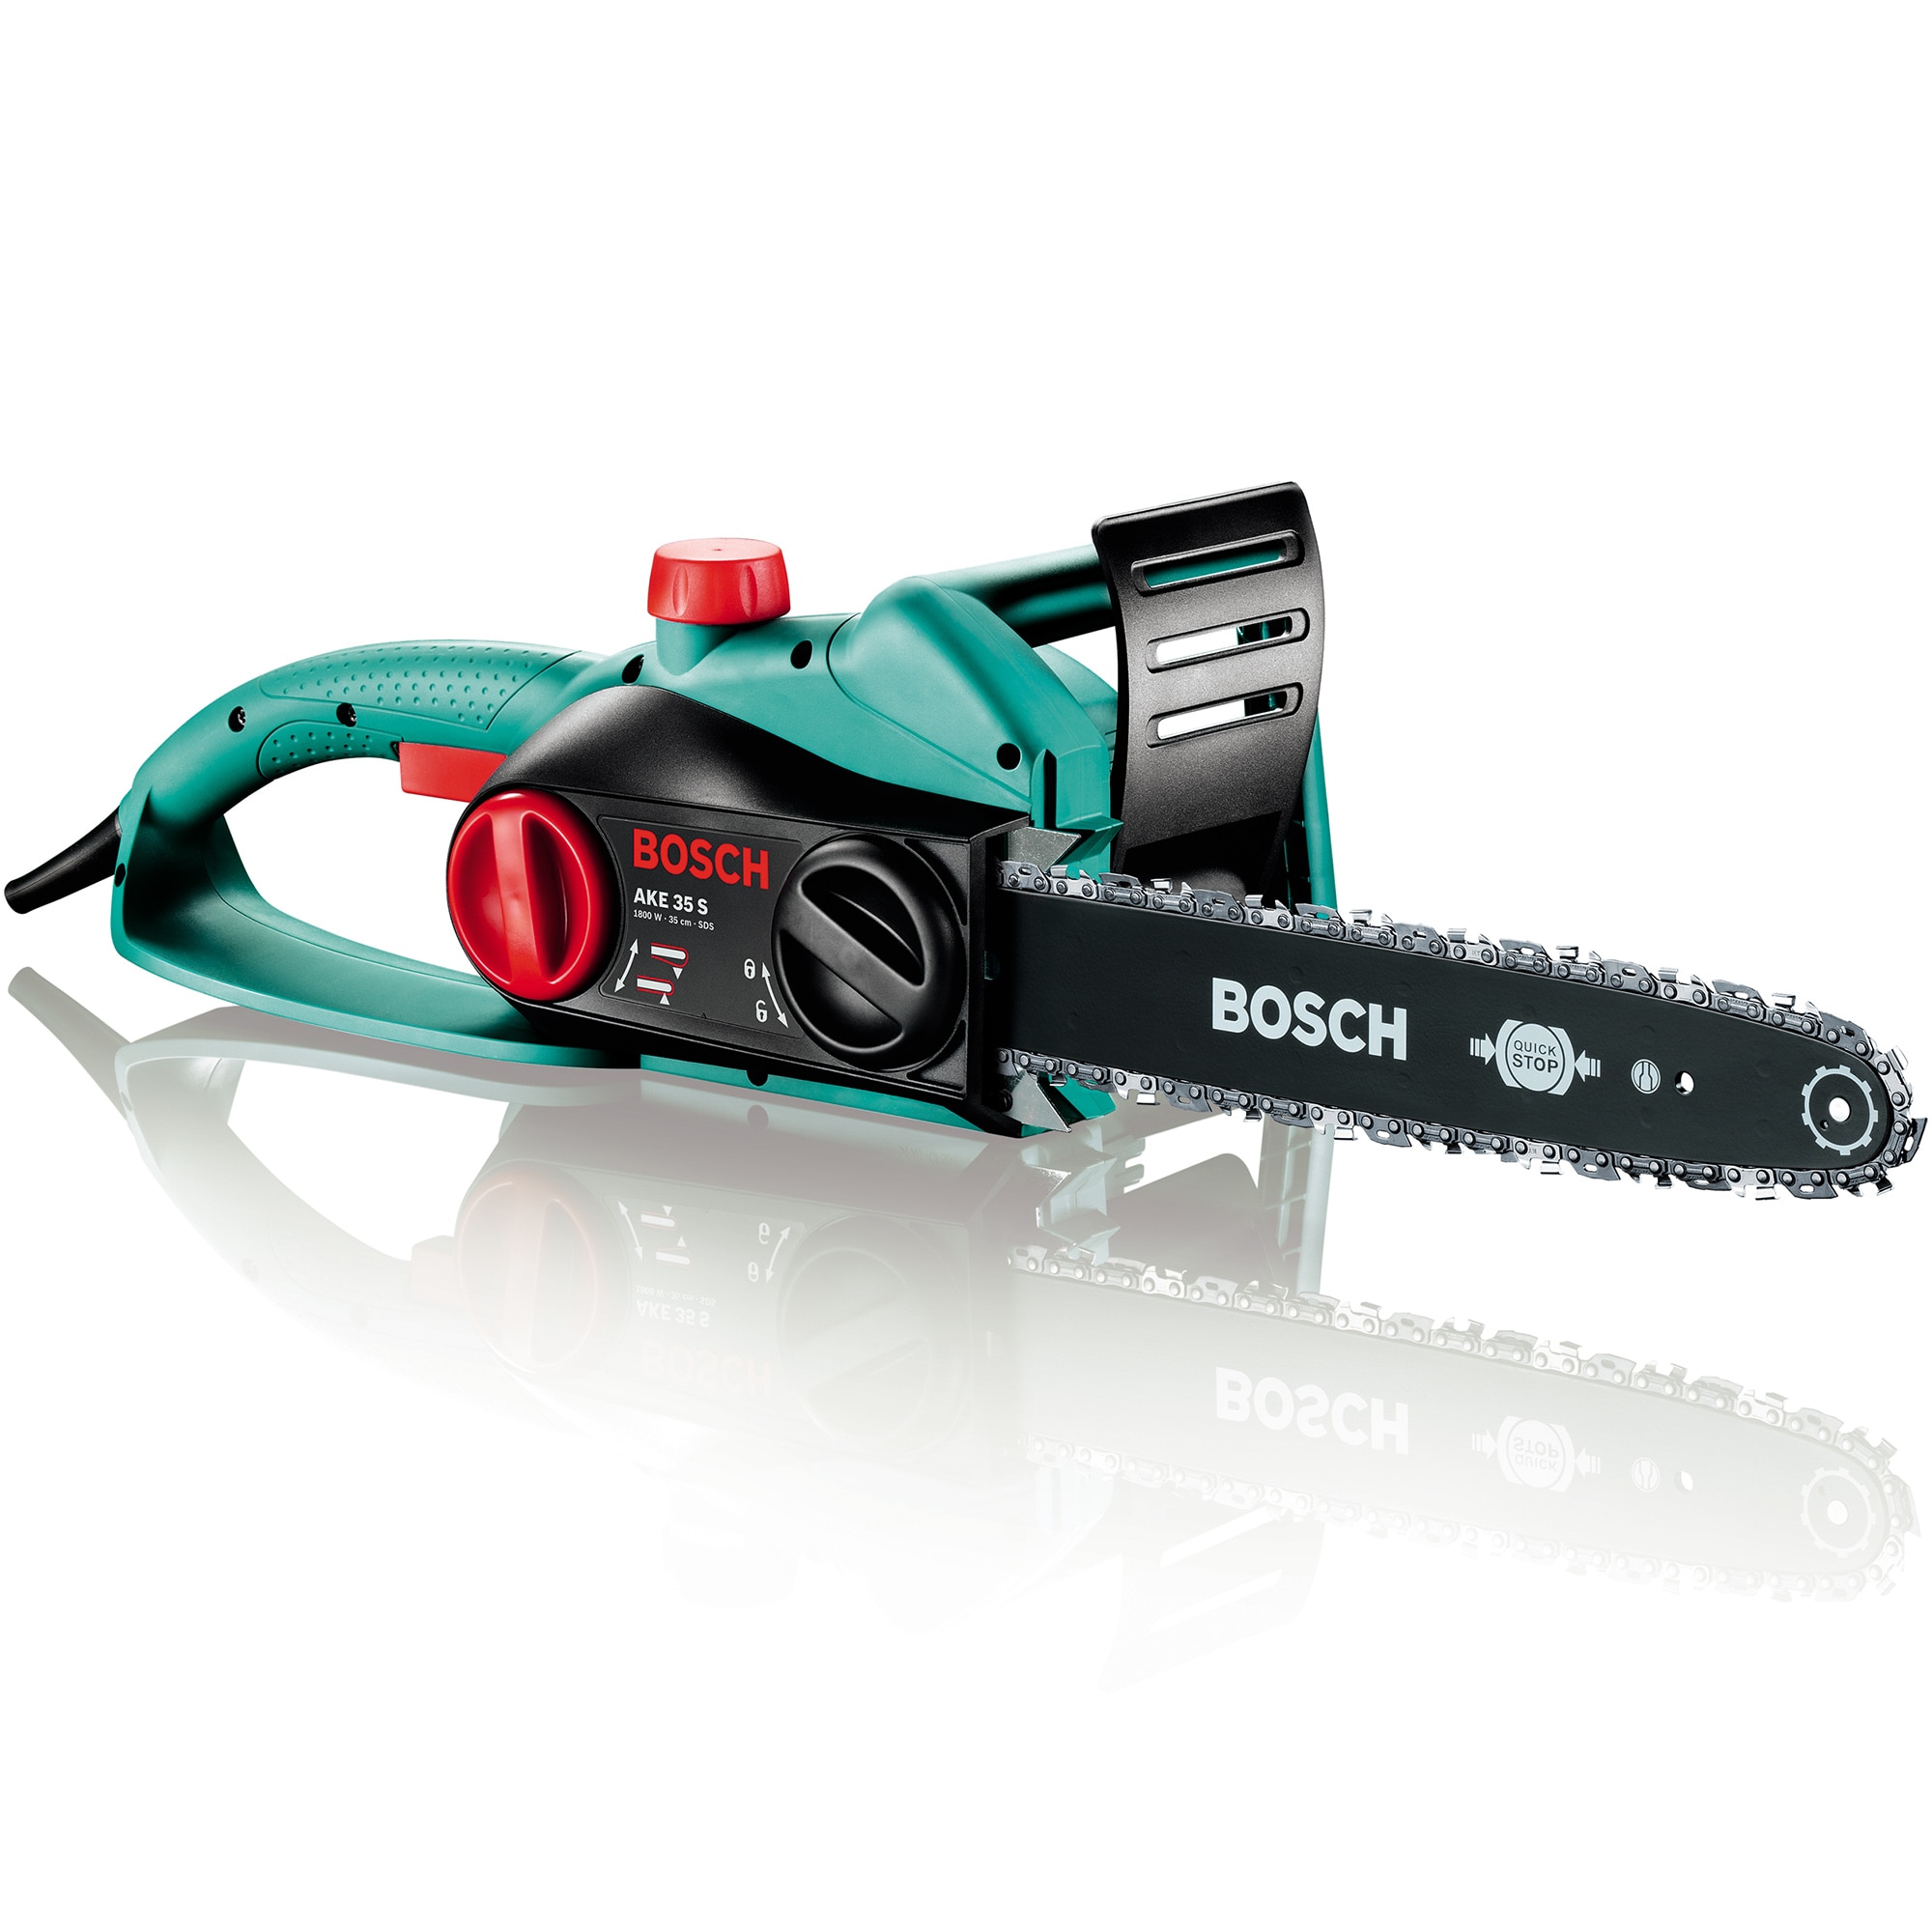 Bosch купить в туле. Bosch ake 35 s (0600834500). Bosch ake 35 s 1800 Вт. Электрическая цепная пила Bosch ake 35 s (0600834500). Цепная электрическая пила Bosch ake 35-19 s.